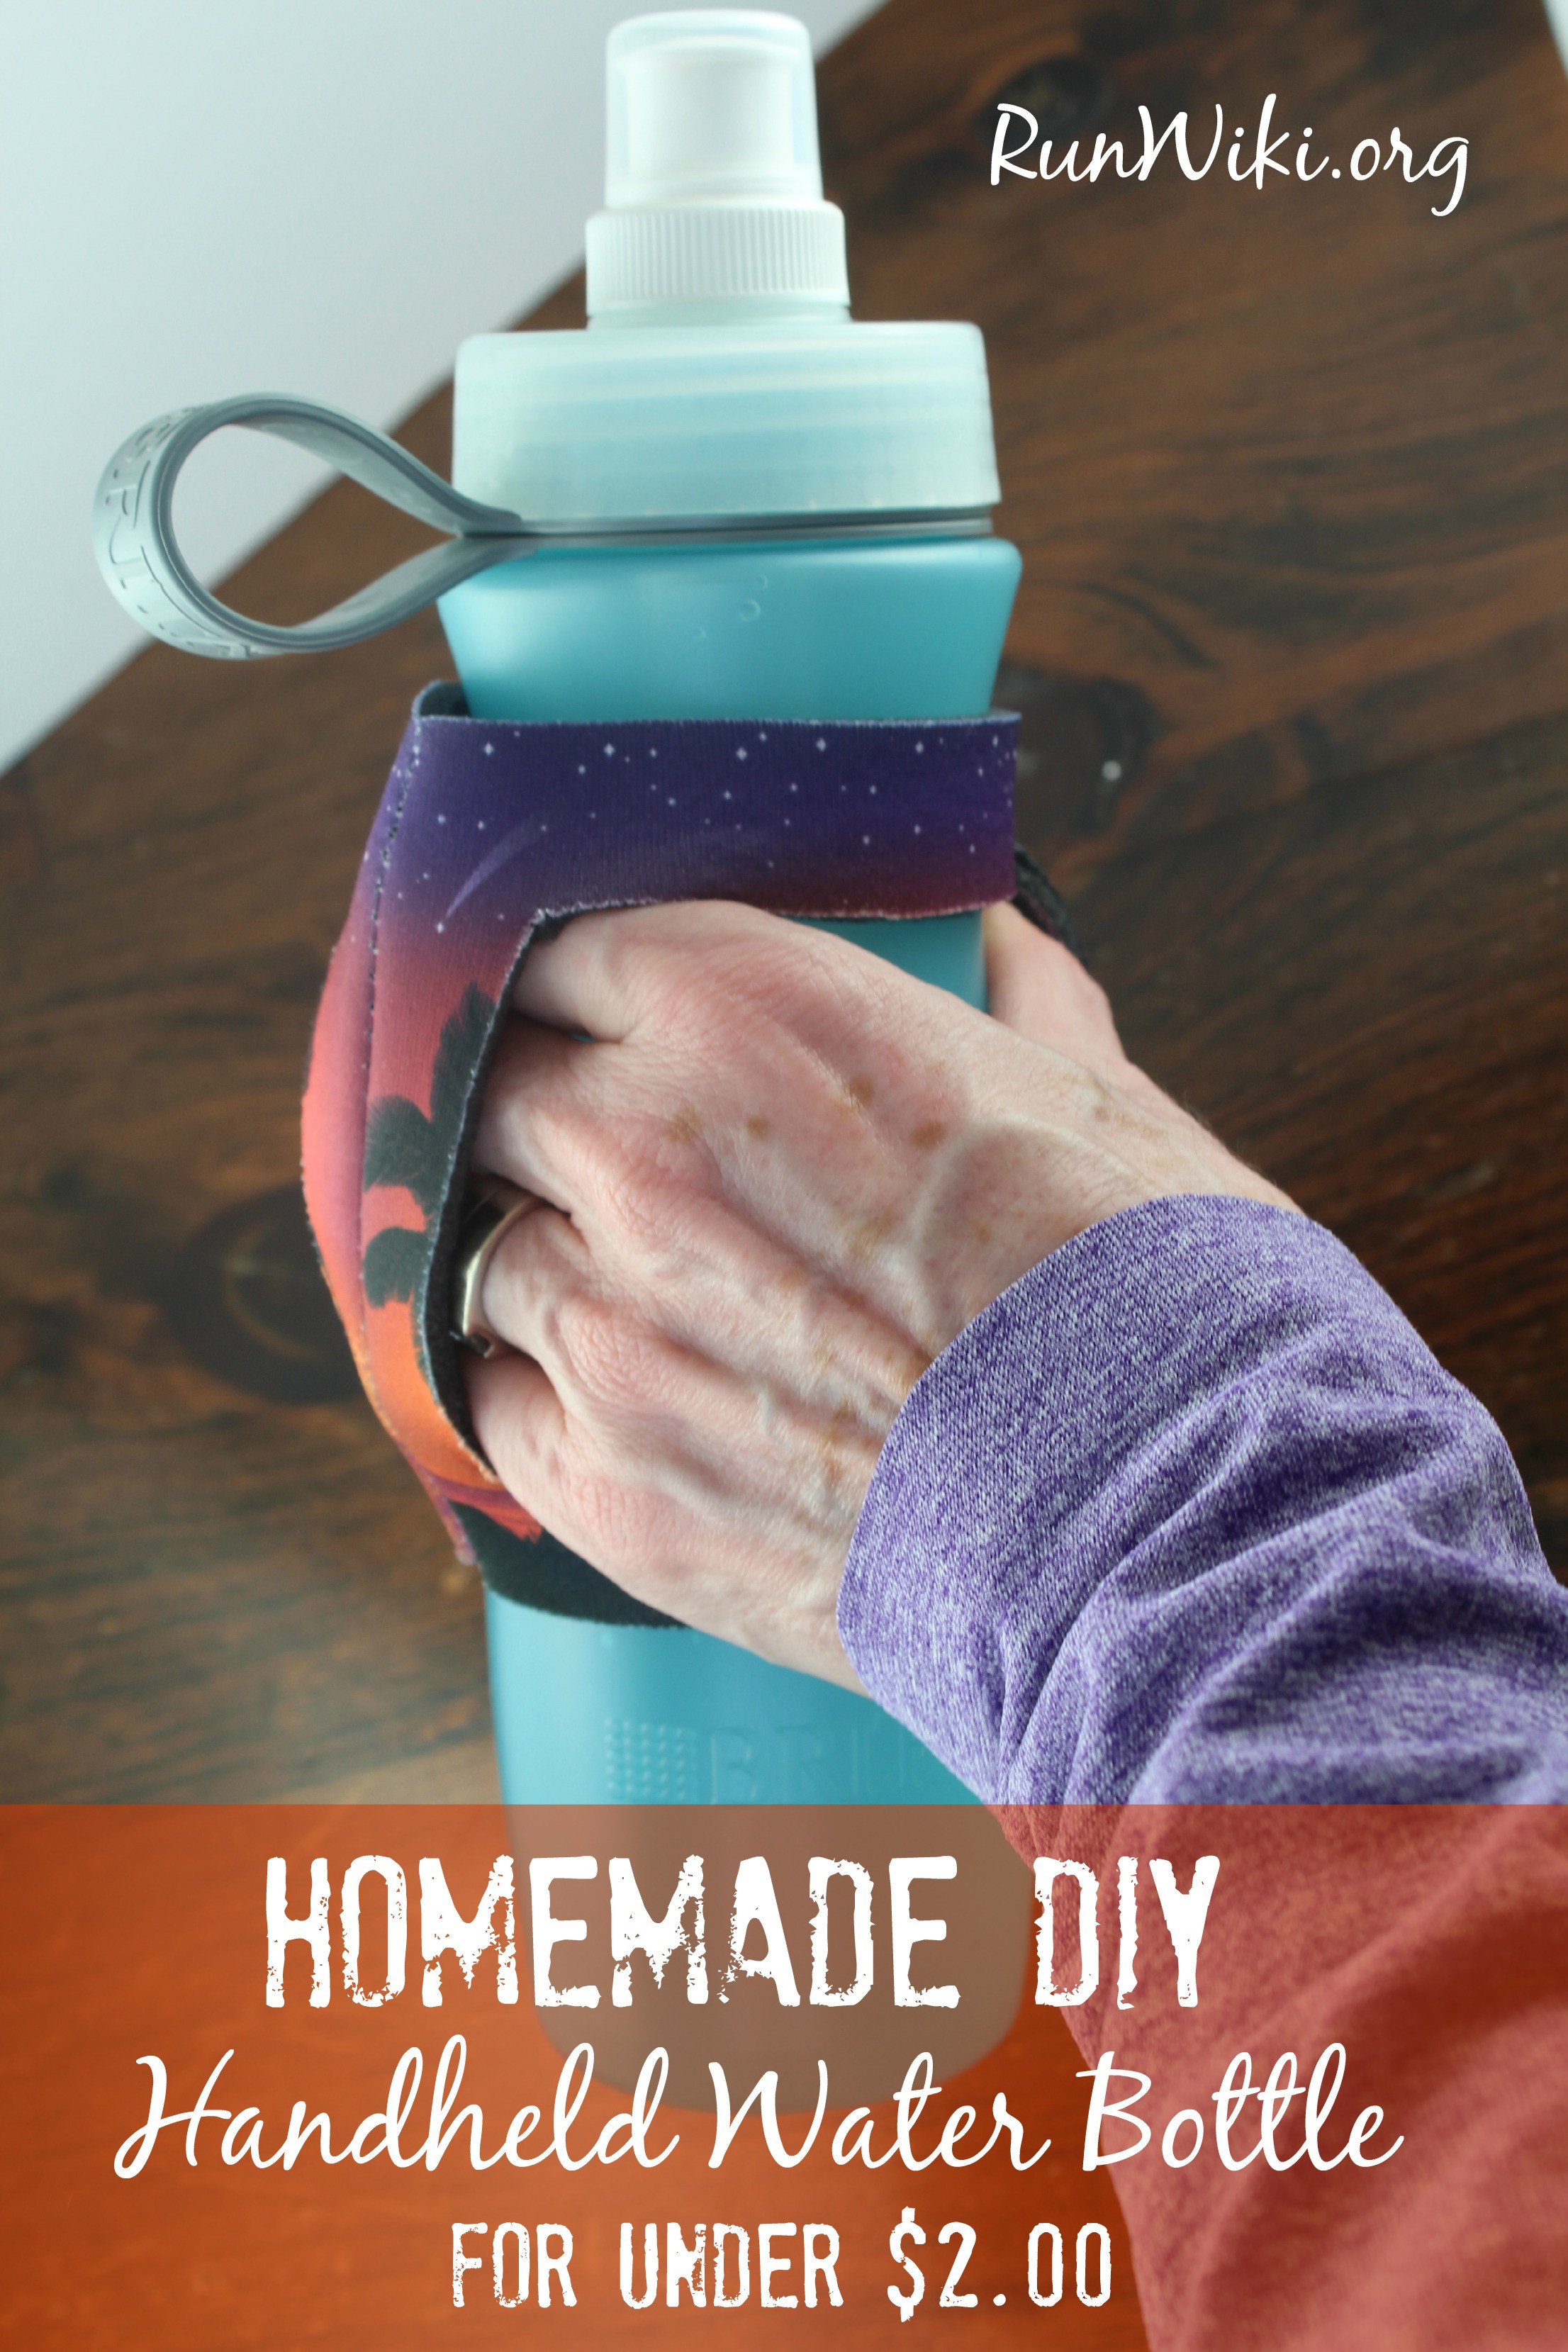 Best ideas about DIY Water Bottle Holder
. Save or Pin Runner Hacks DIY Handheld Water Bottle Holder for under $2 00 Now.